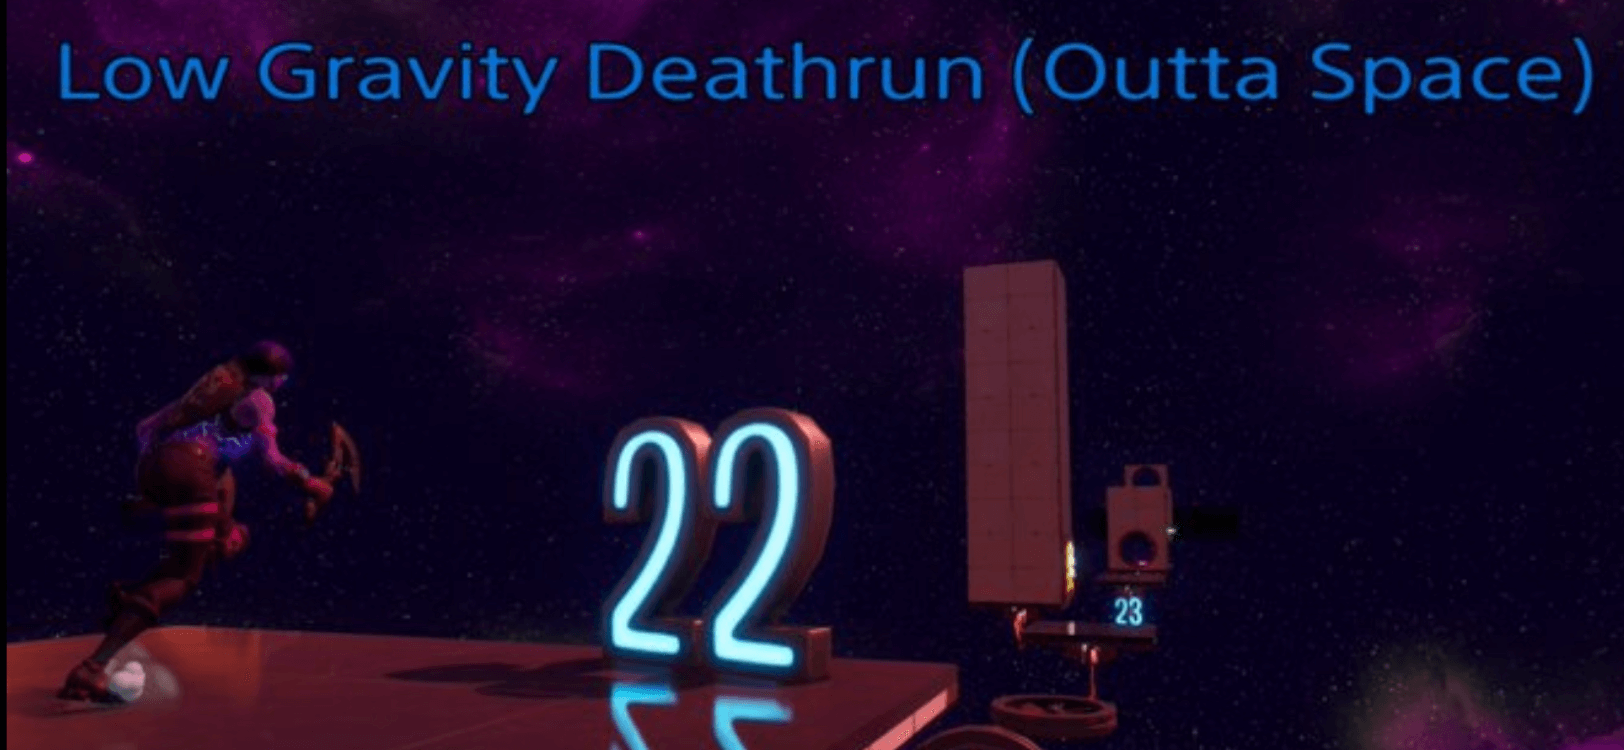 LOW GRAVITY DEATHRUN (OUTTA SPACE)